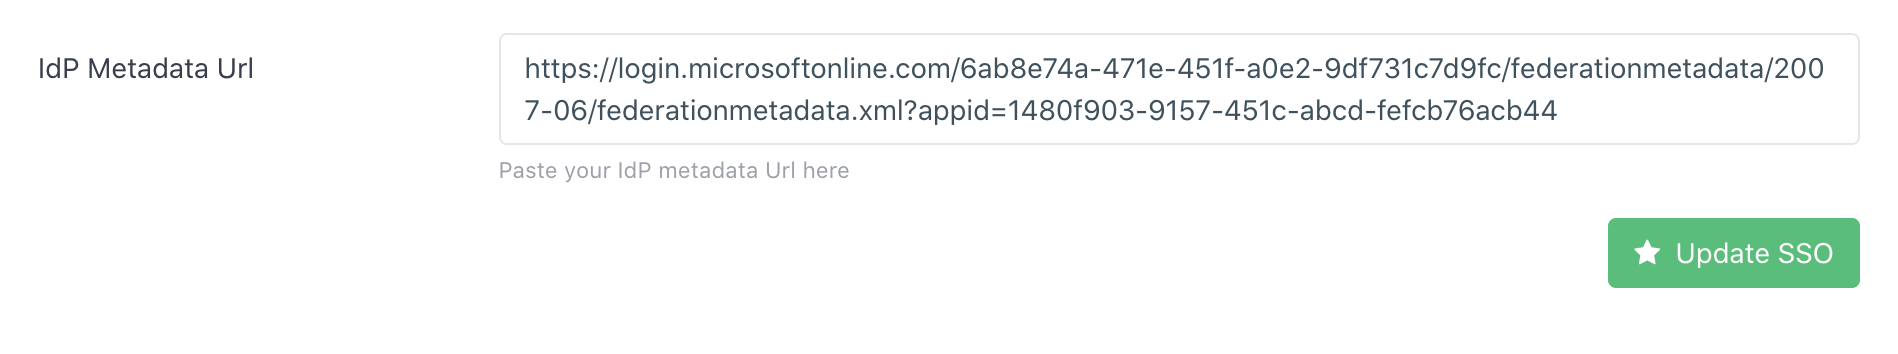 idp-metadata-url